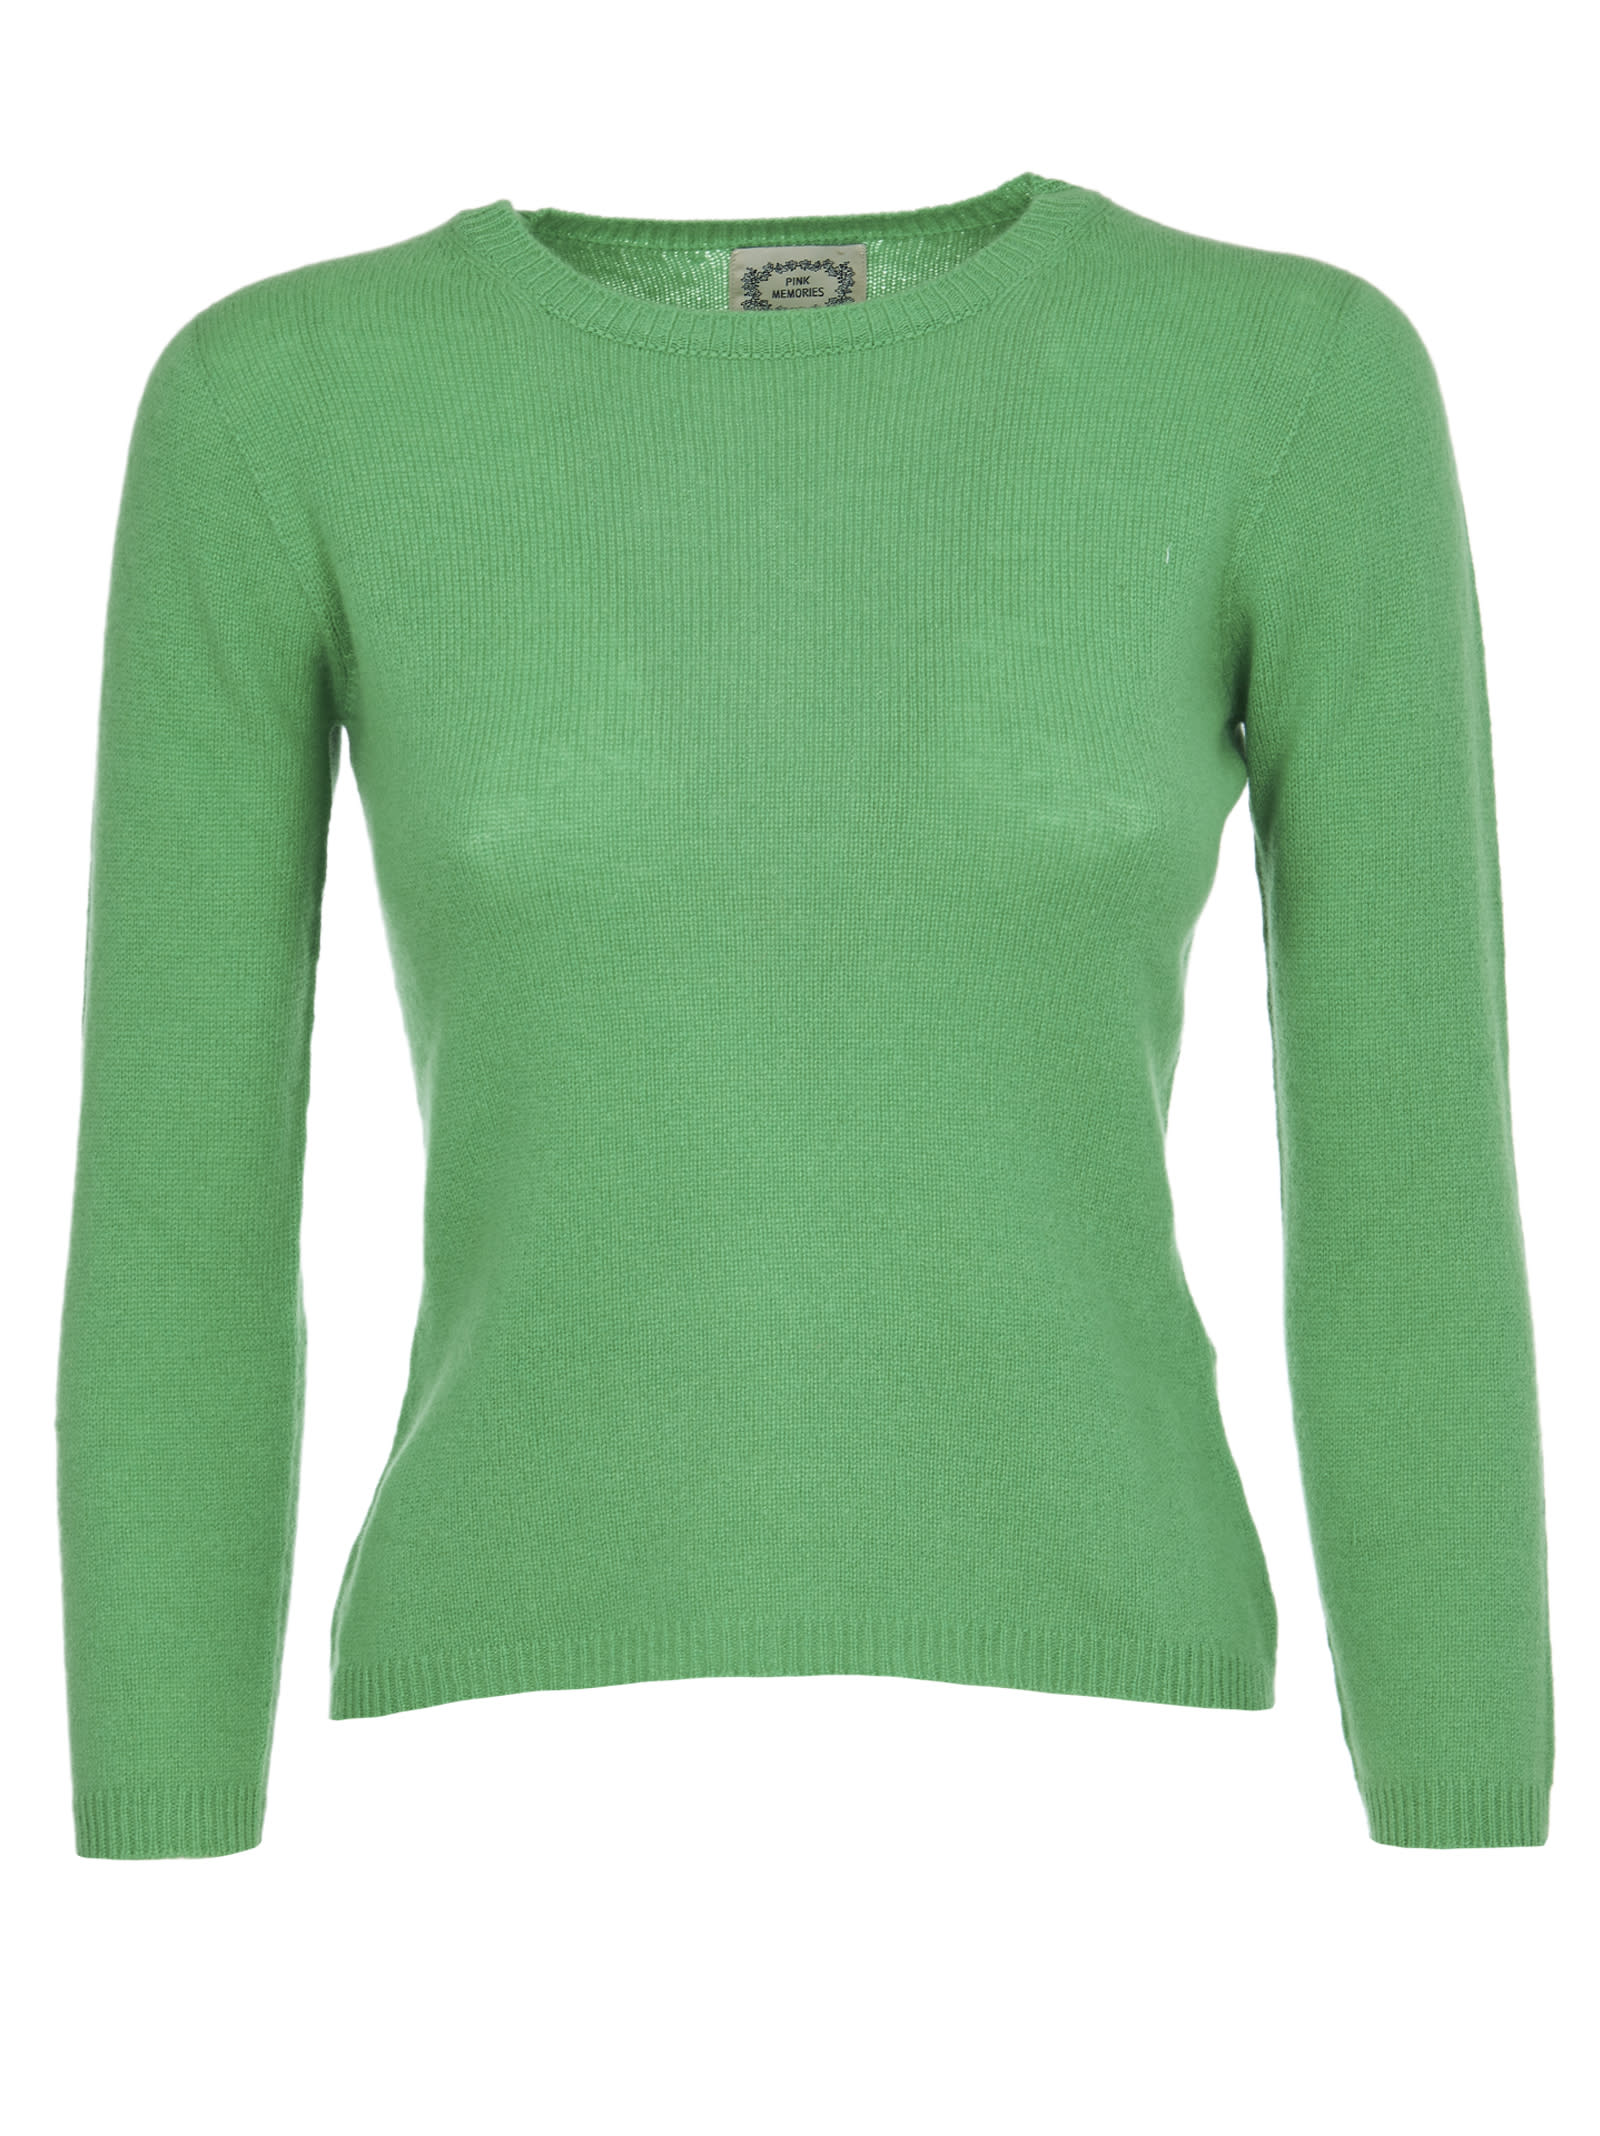 Pink Memories Green Cashmere Sweater